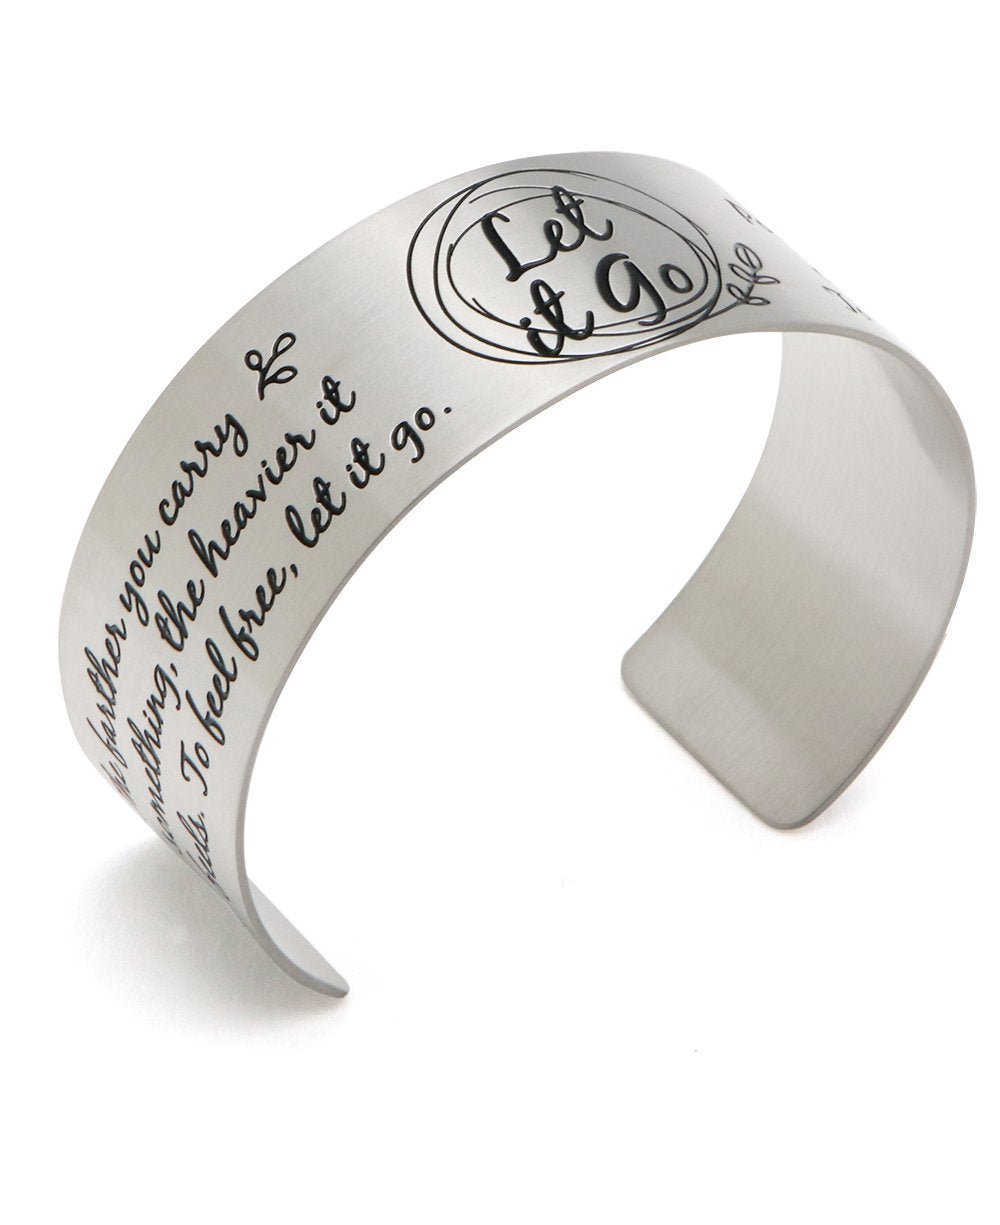 Let It Go Inspirational Cuff Bracelet in Adjustable Stainless Steel - Bracelets